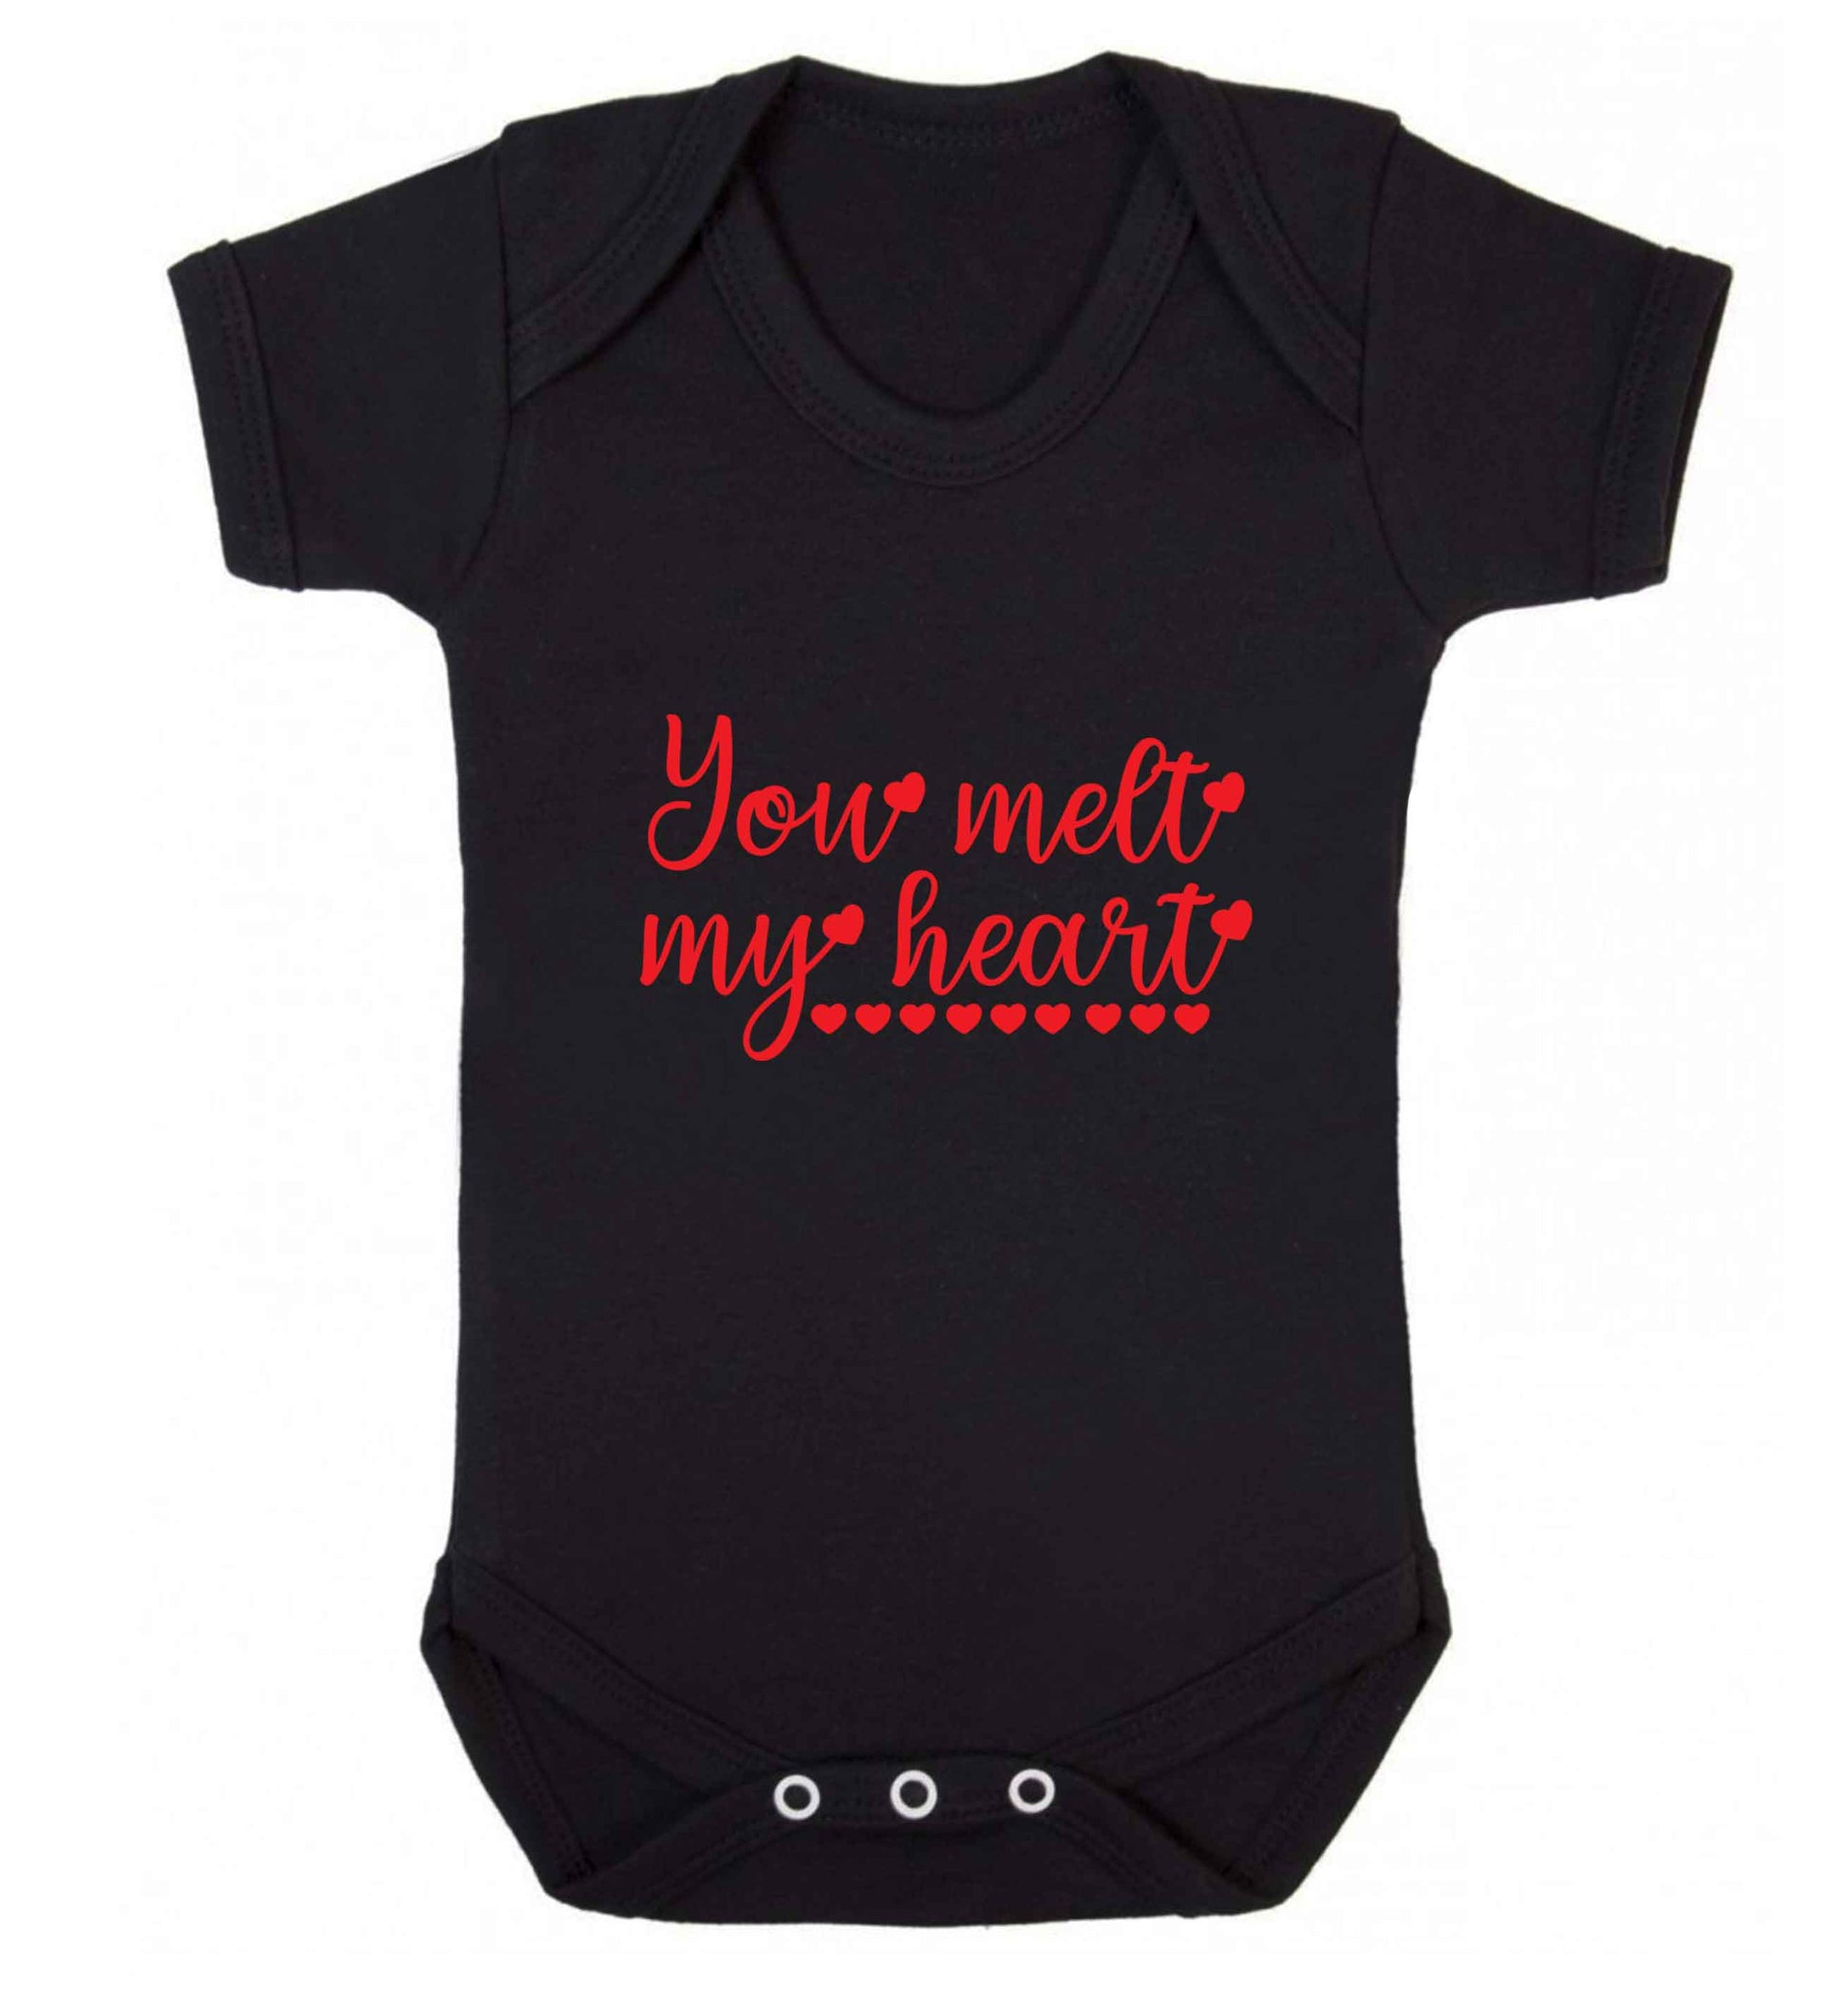 You melt my heart baby vest black 18-24 months